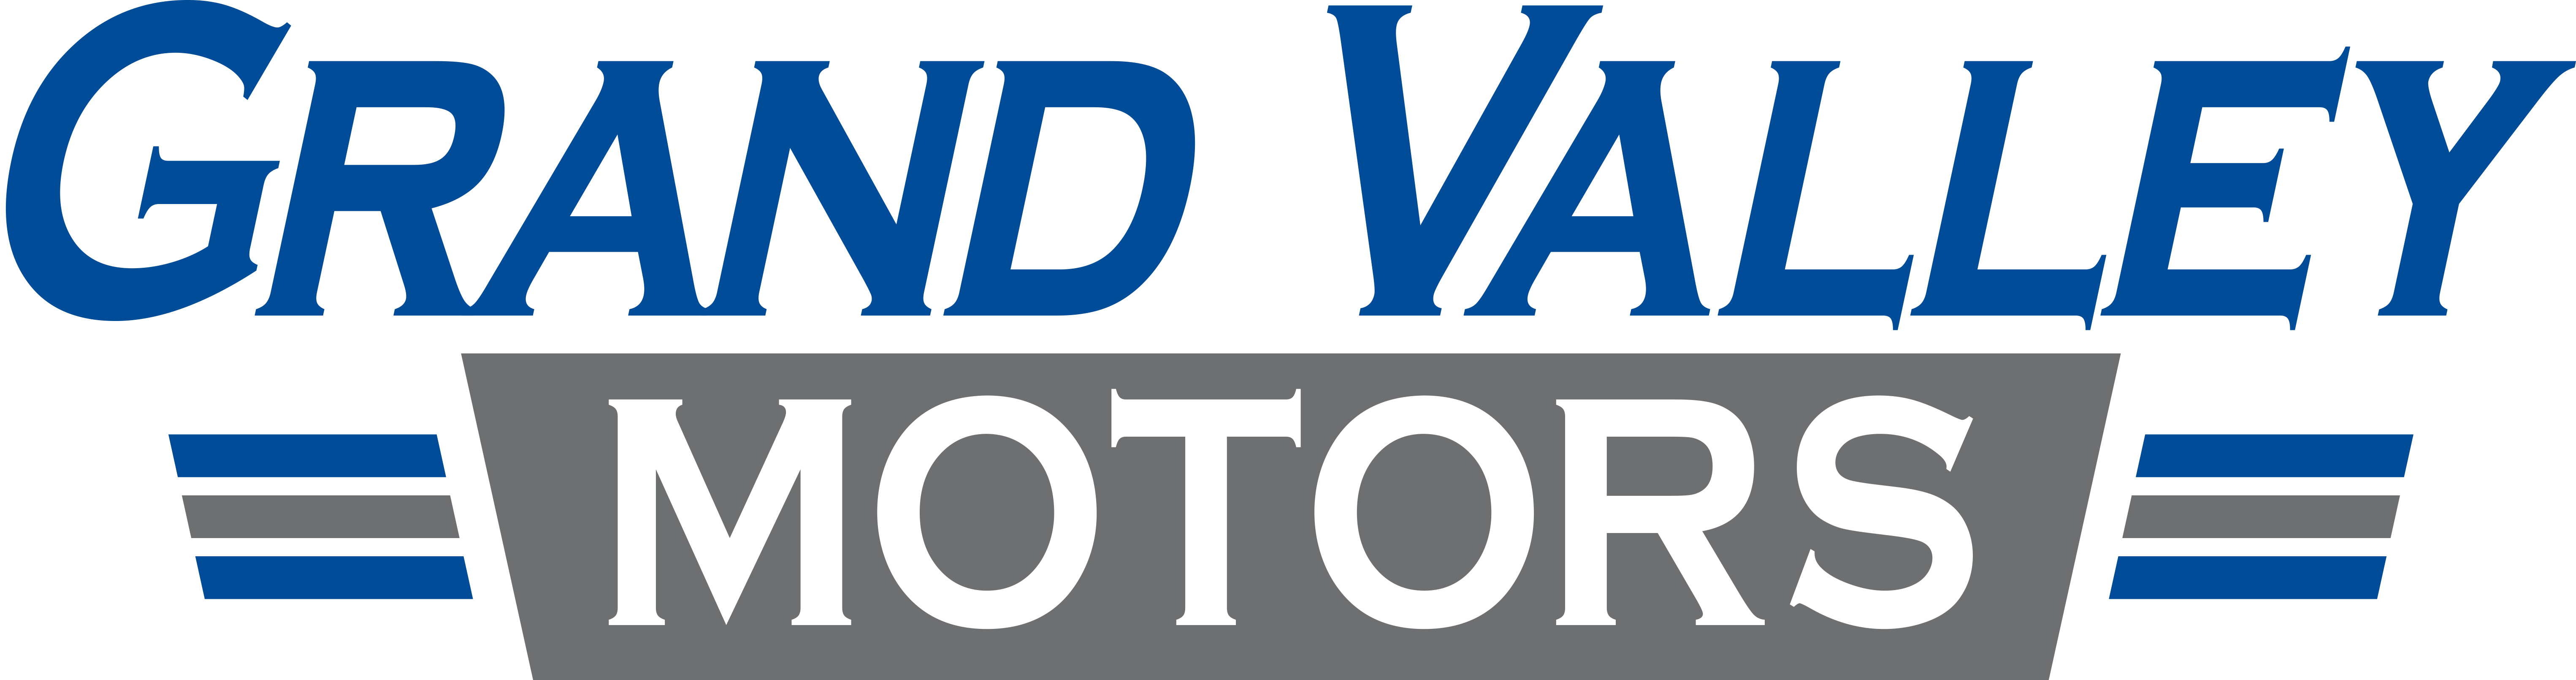 Grand Valley Motors